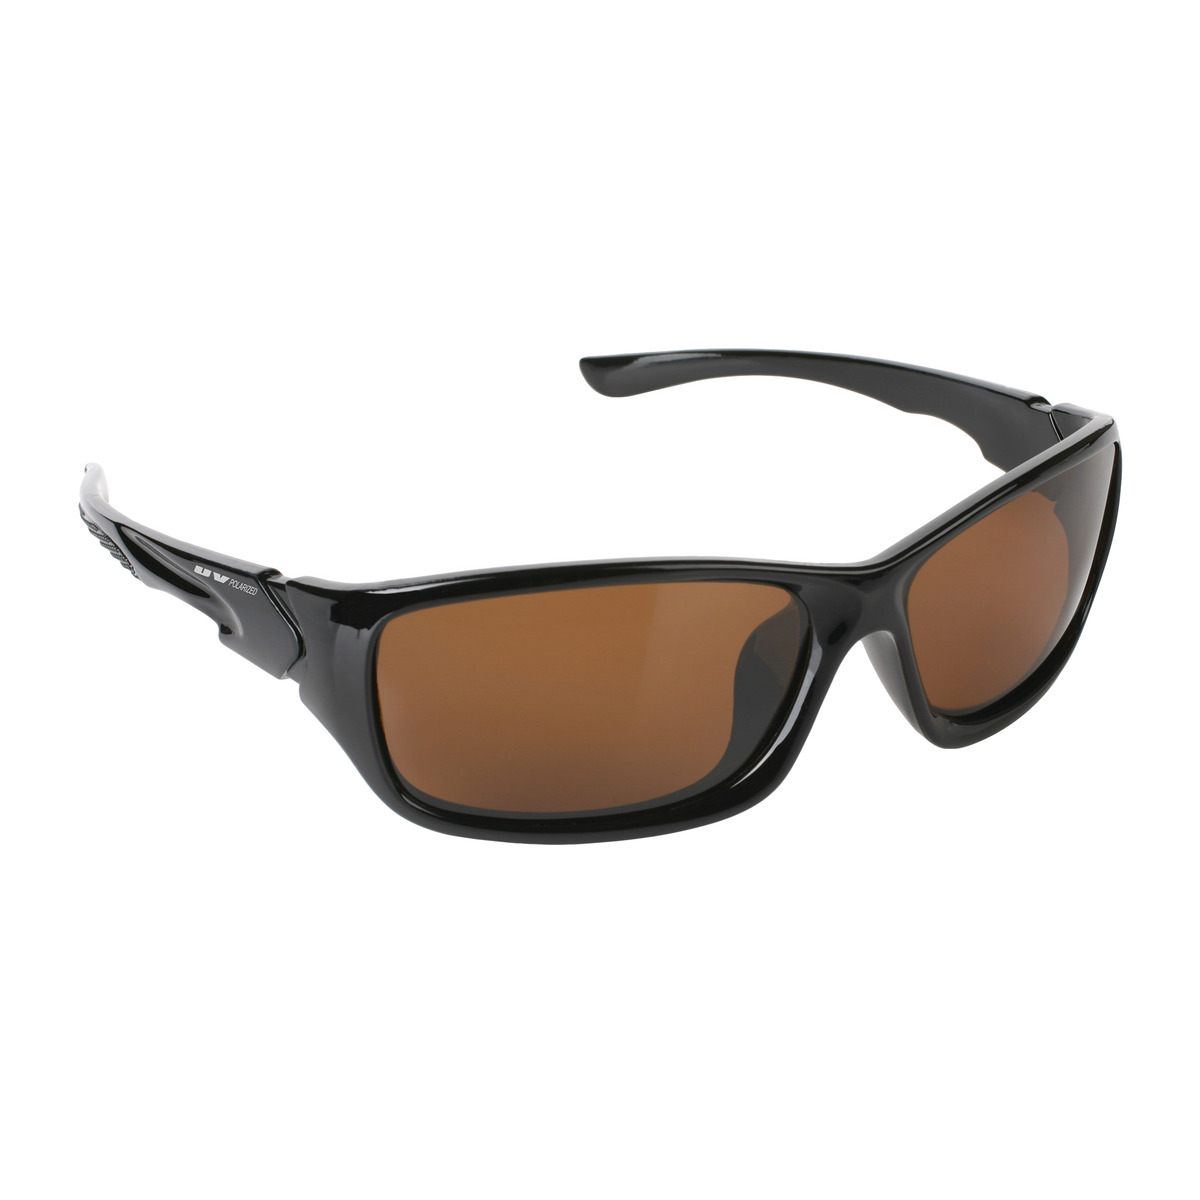 Mikado Sunglasses Polarized - 82227 BROWN